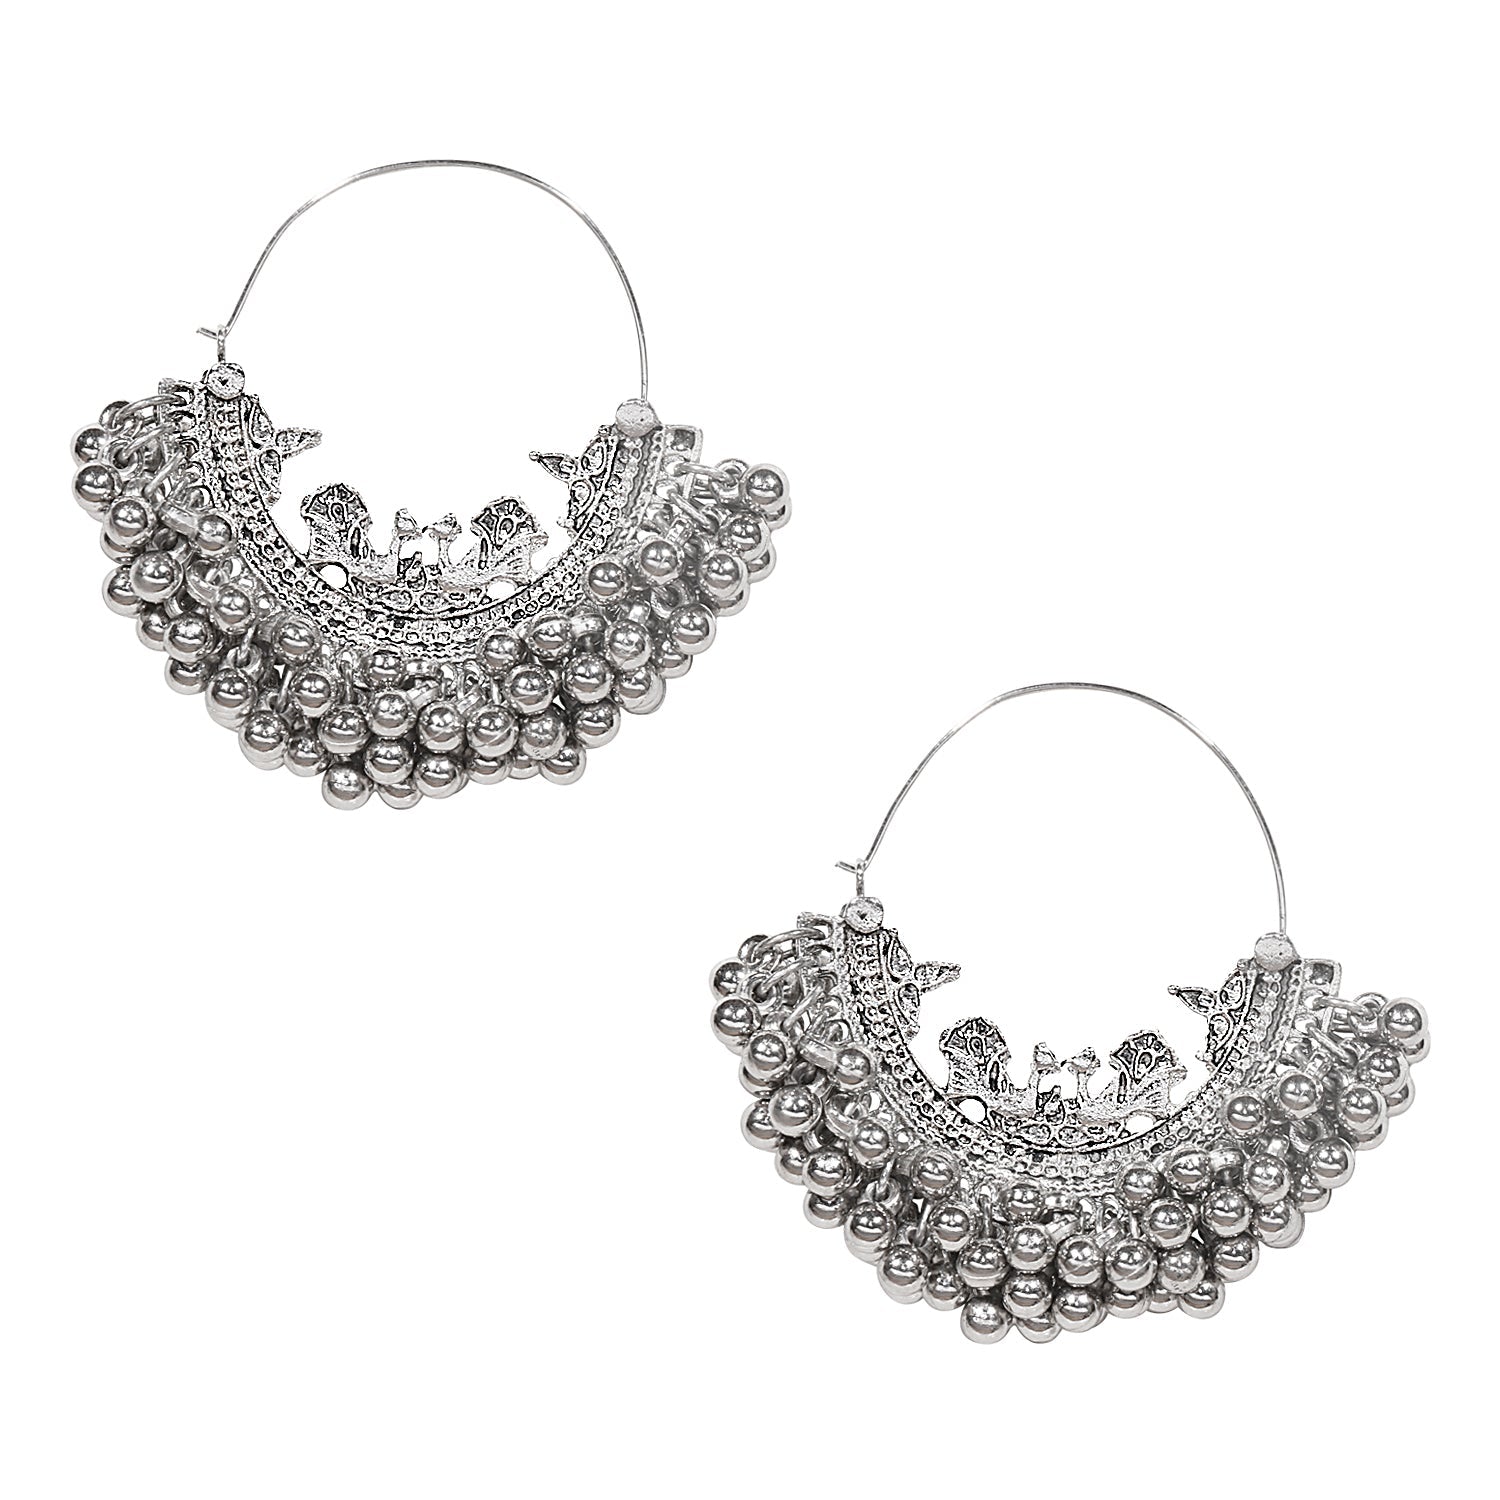 Small Hoop Earrings Set Stainless Steel Huggie Earrings for Women Girls,8MM-16MM  | eBay